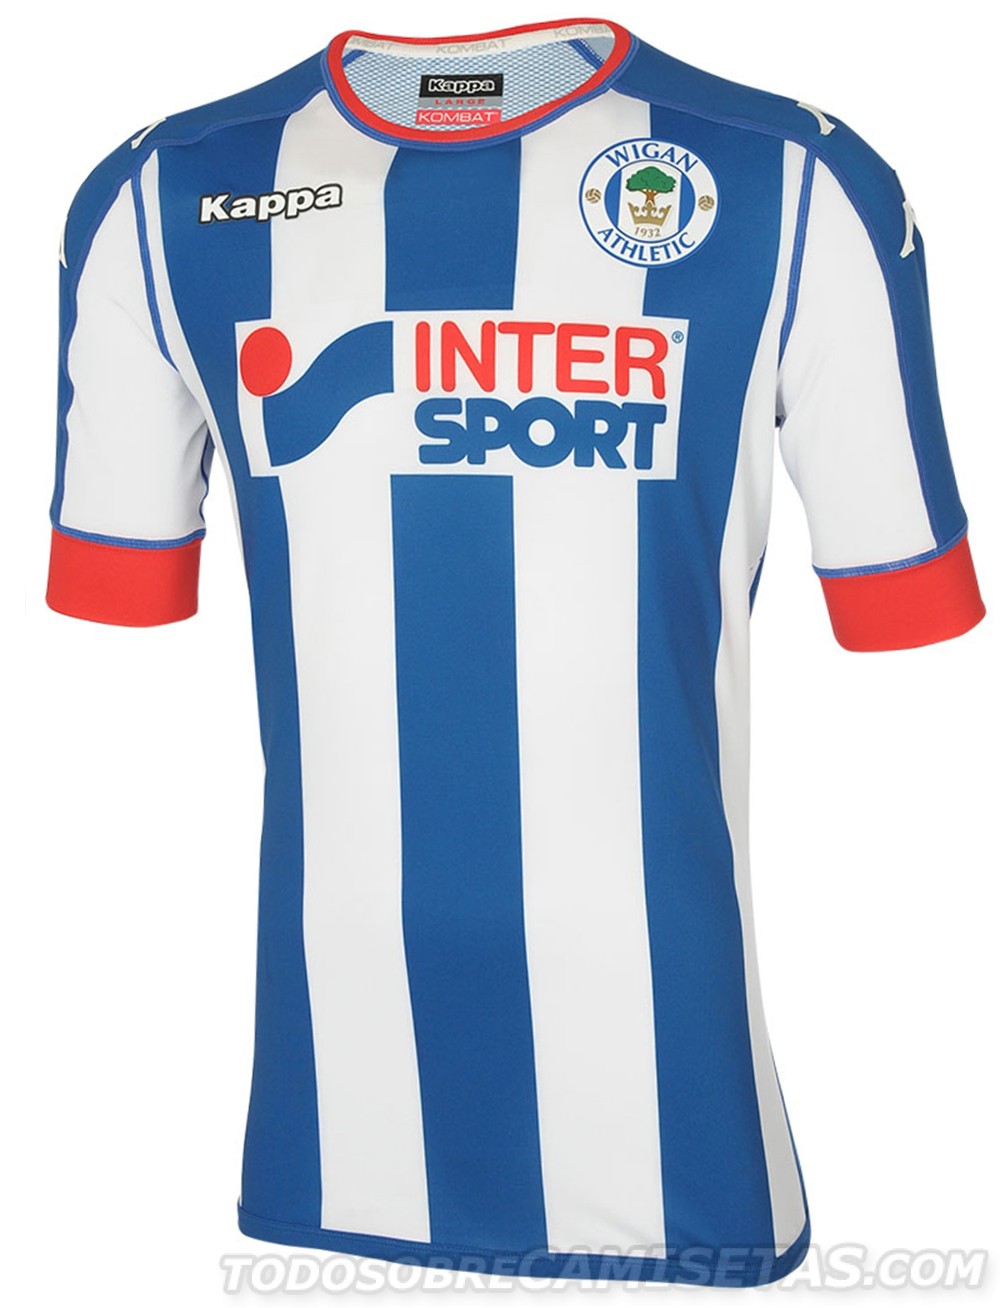 Wigan Athletic 2016-17 Kappa Home Kit